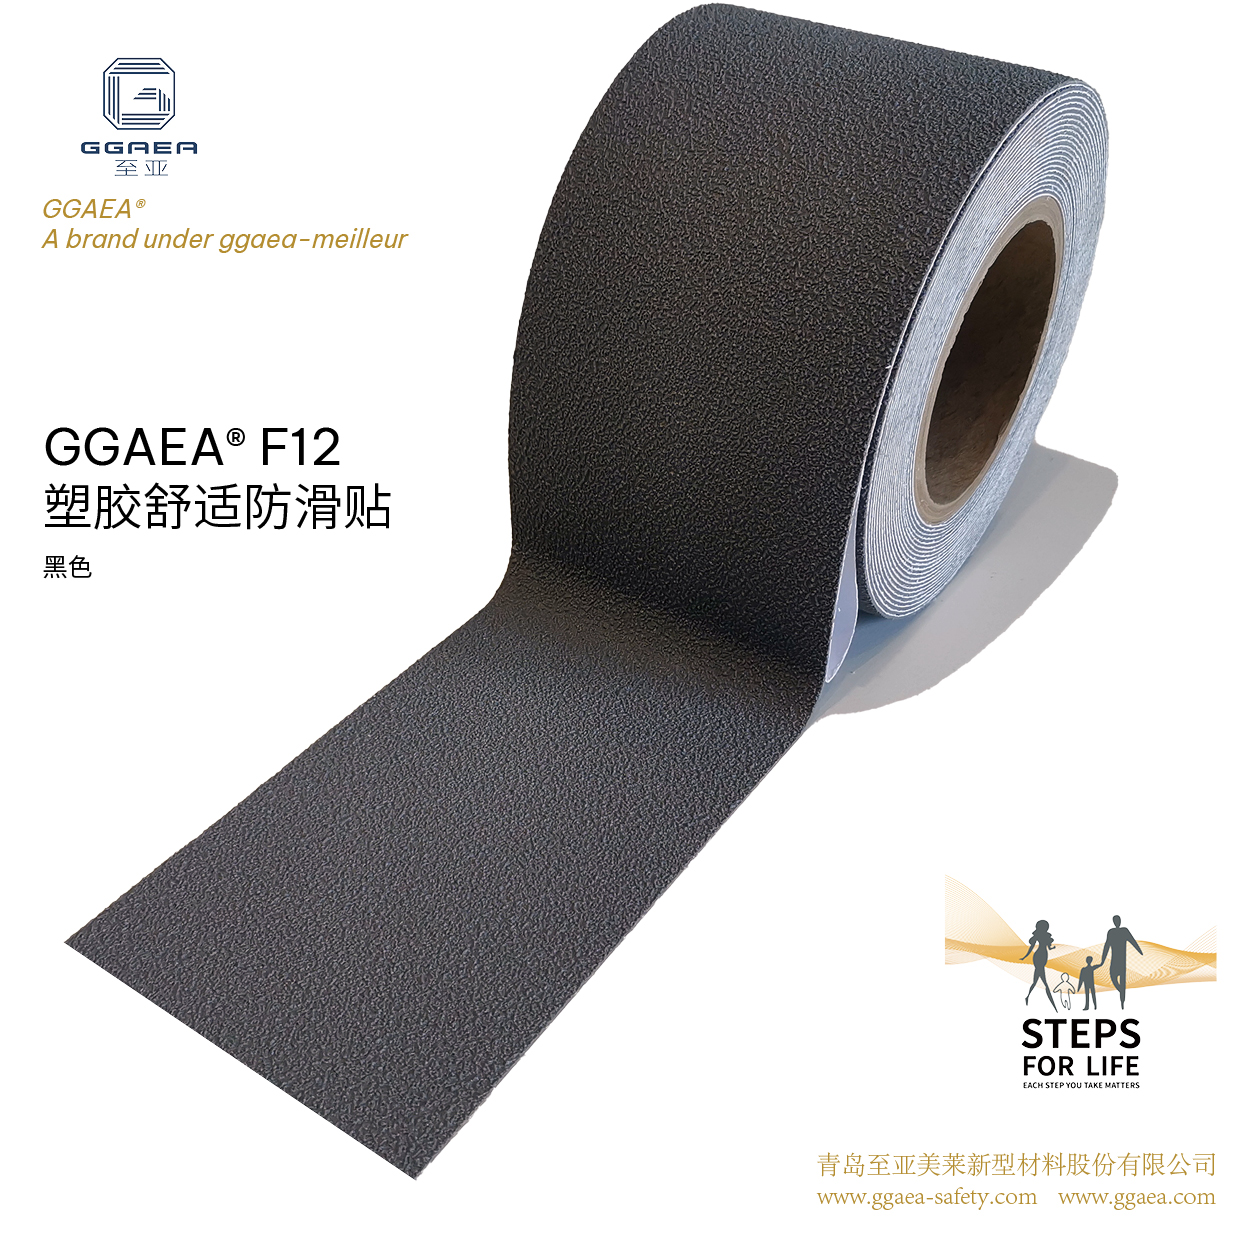 GGAEA™ F12 Rubber Anti Slip Tape and Threads Black